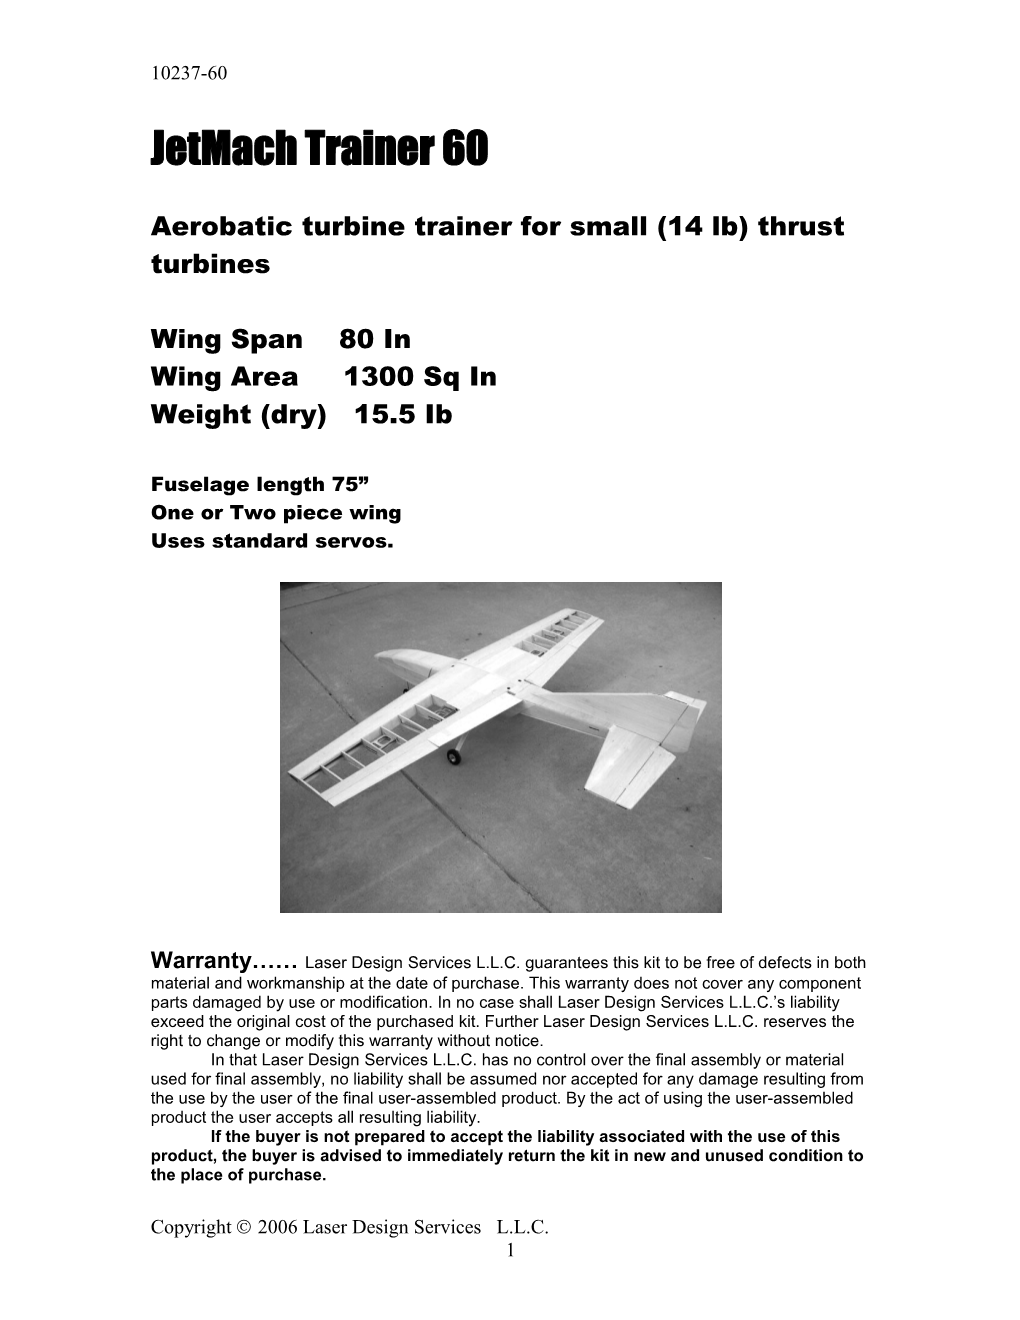 Aerobatic Turbine Trainer for Small (14 Lb) Thrust Turbines